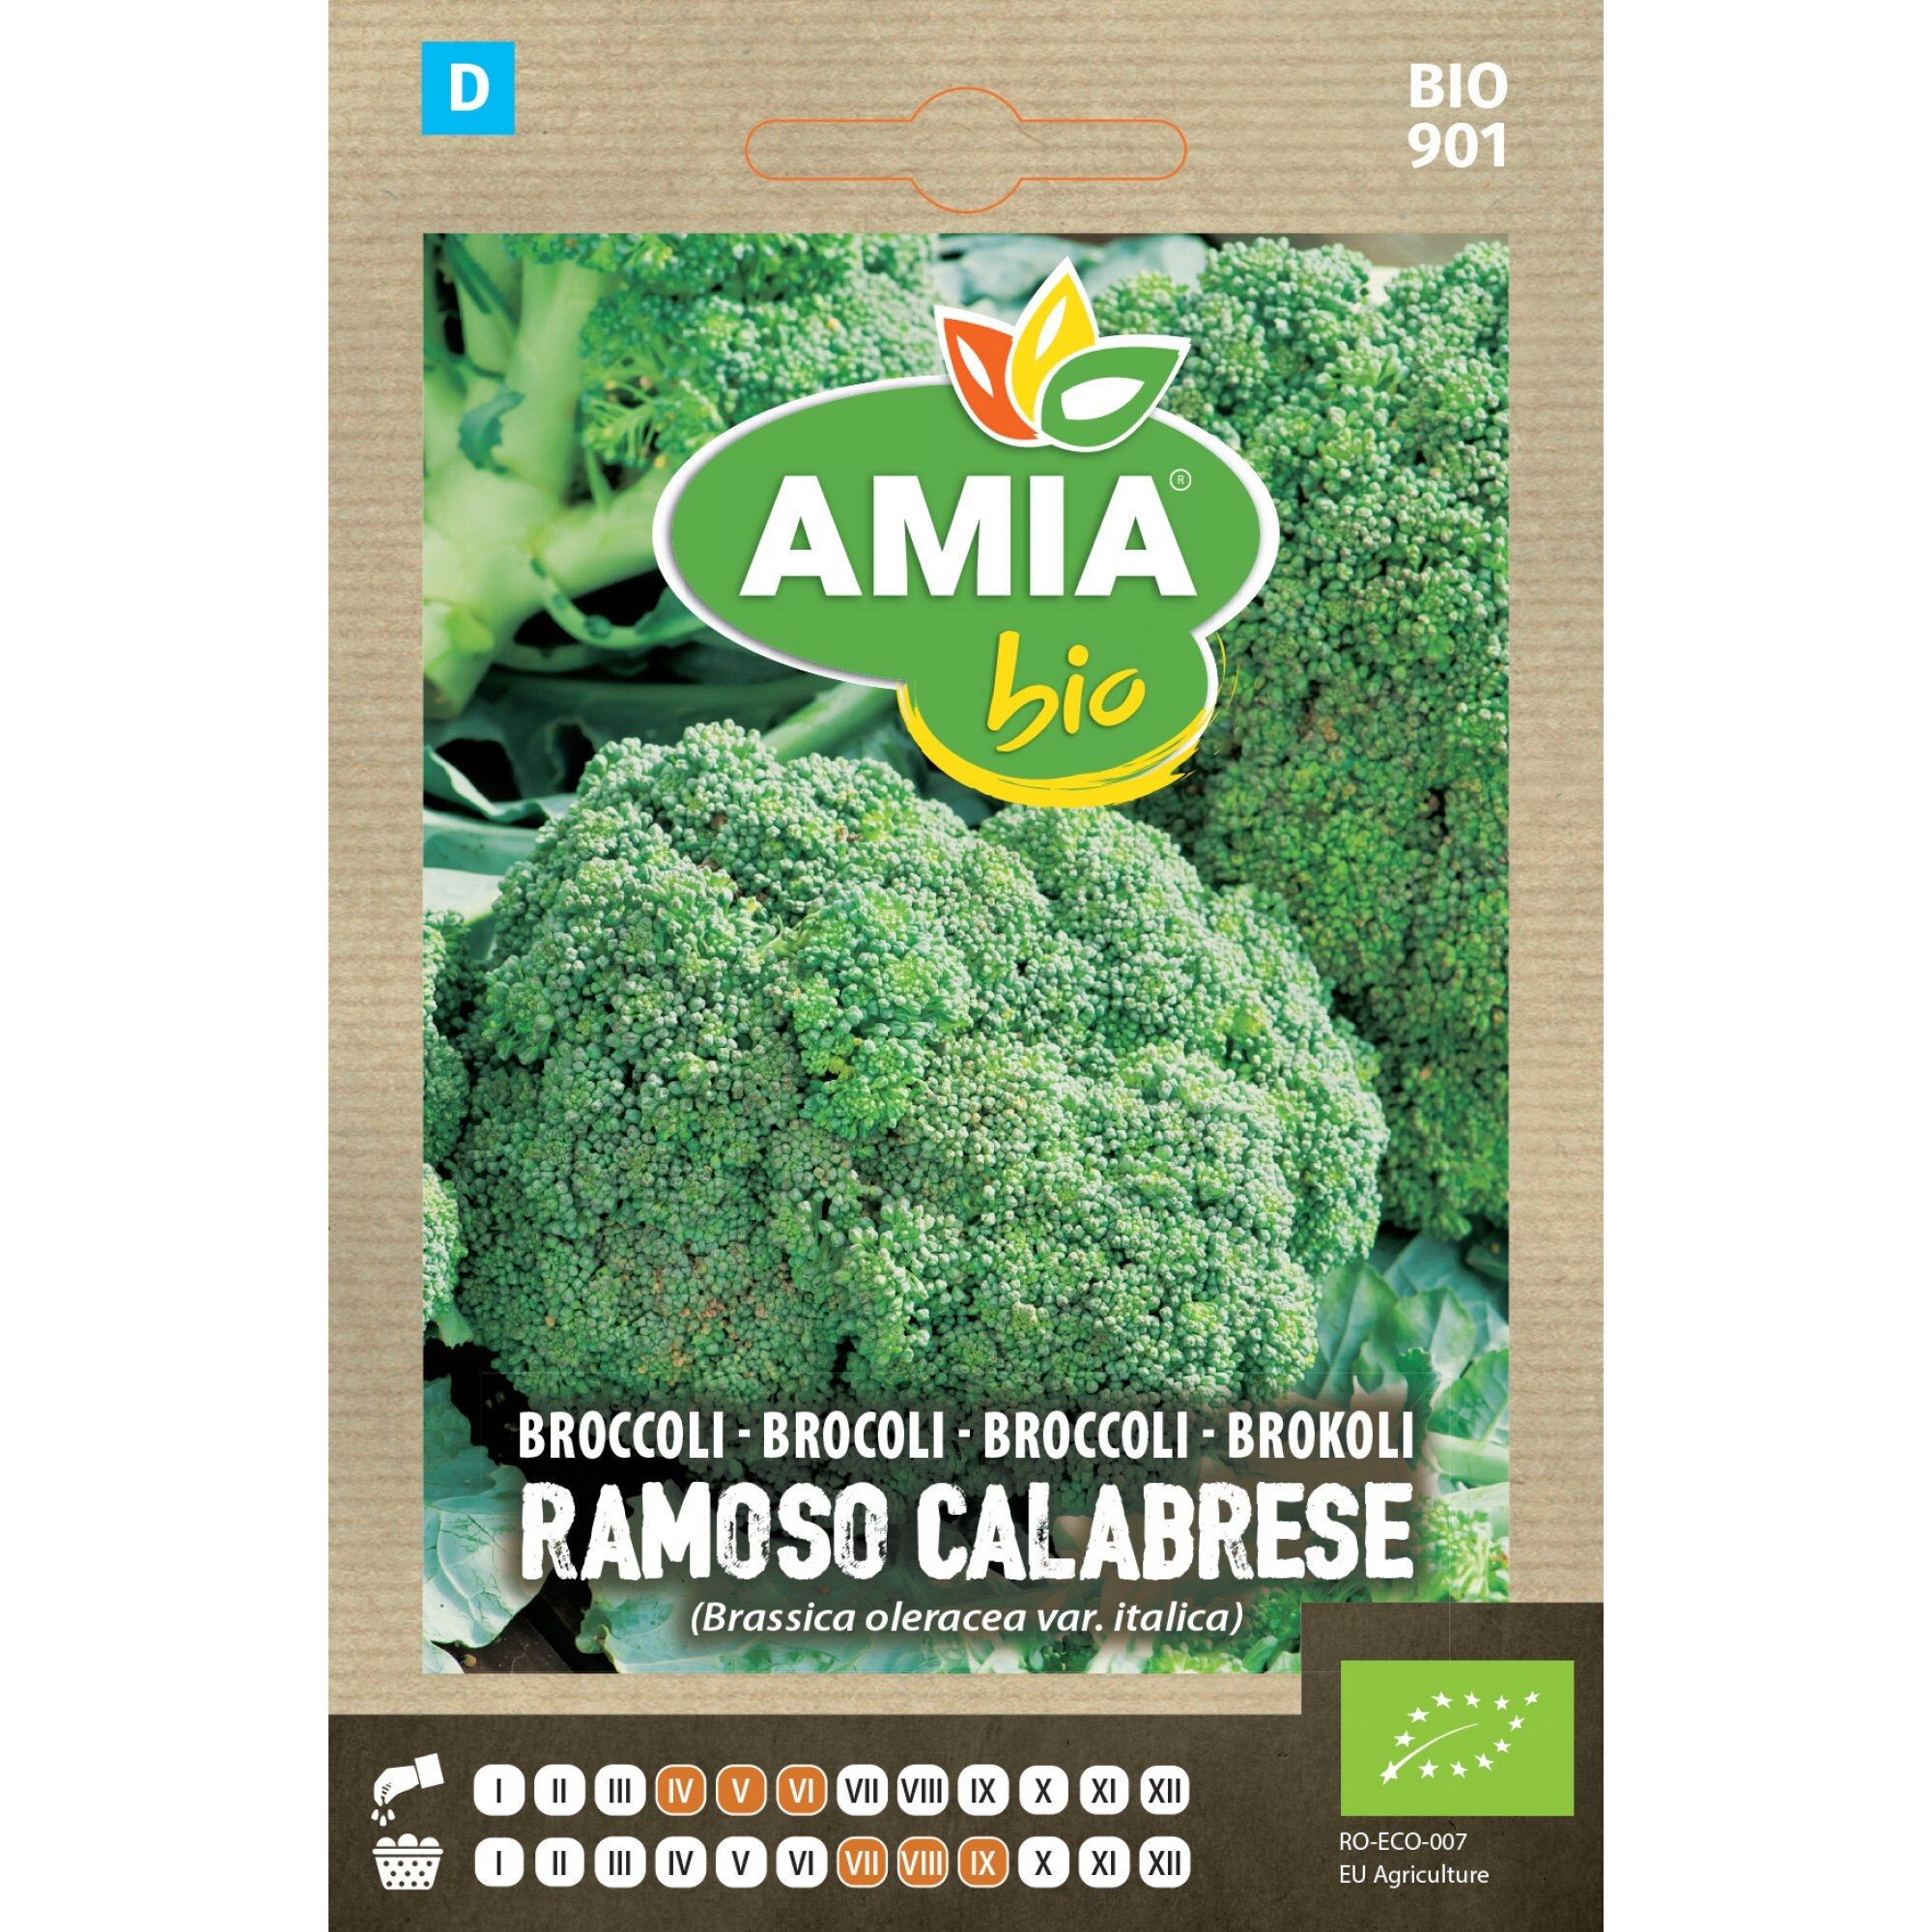 century fall back considerate Seminte bio brocoli, 2,5 grame, AMIA - eMAG.ro